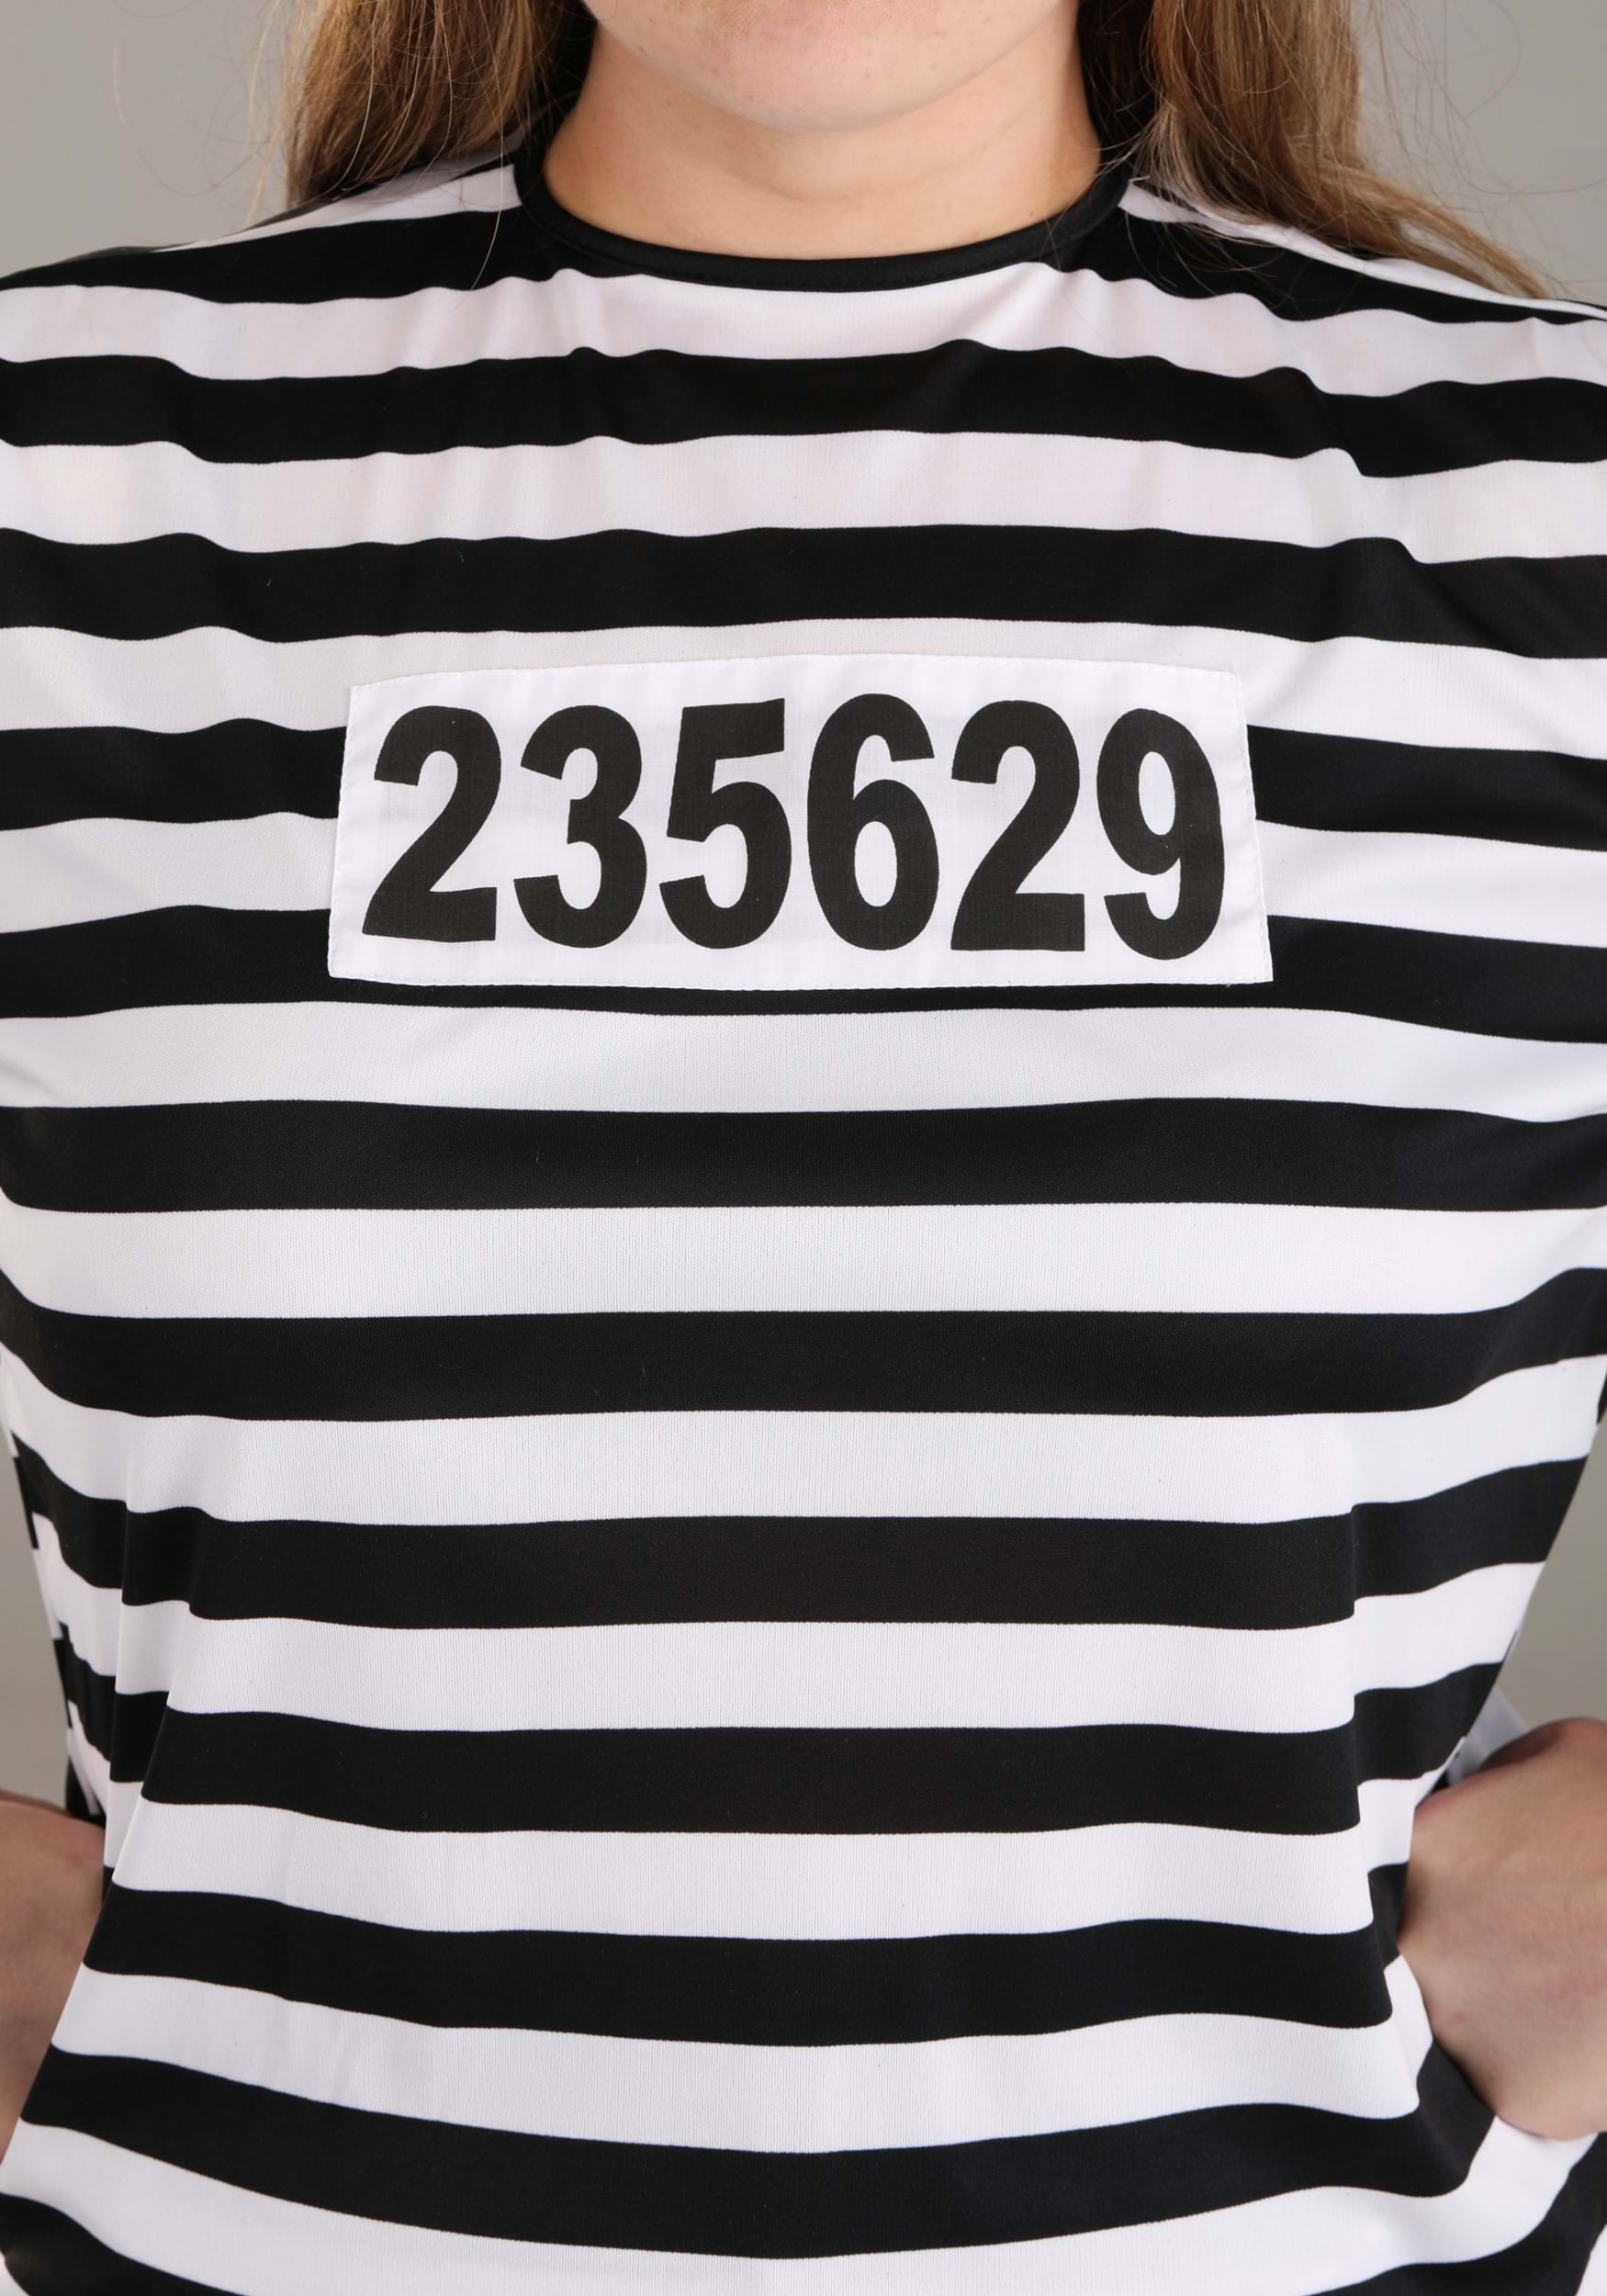 Women's Striped Prisoner Costume